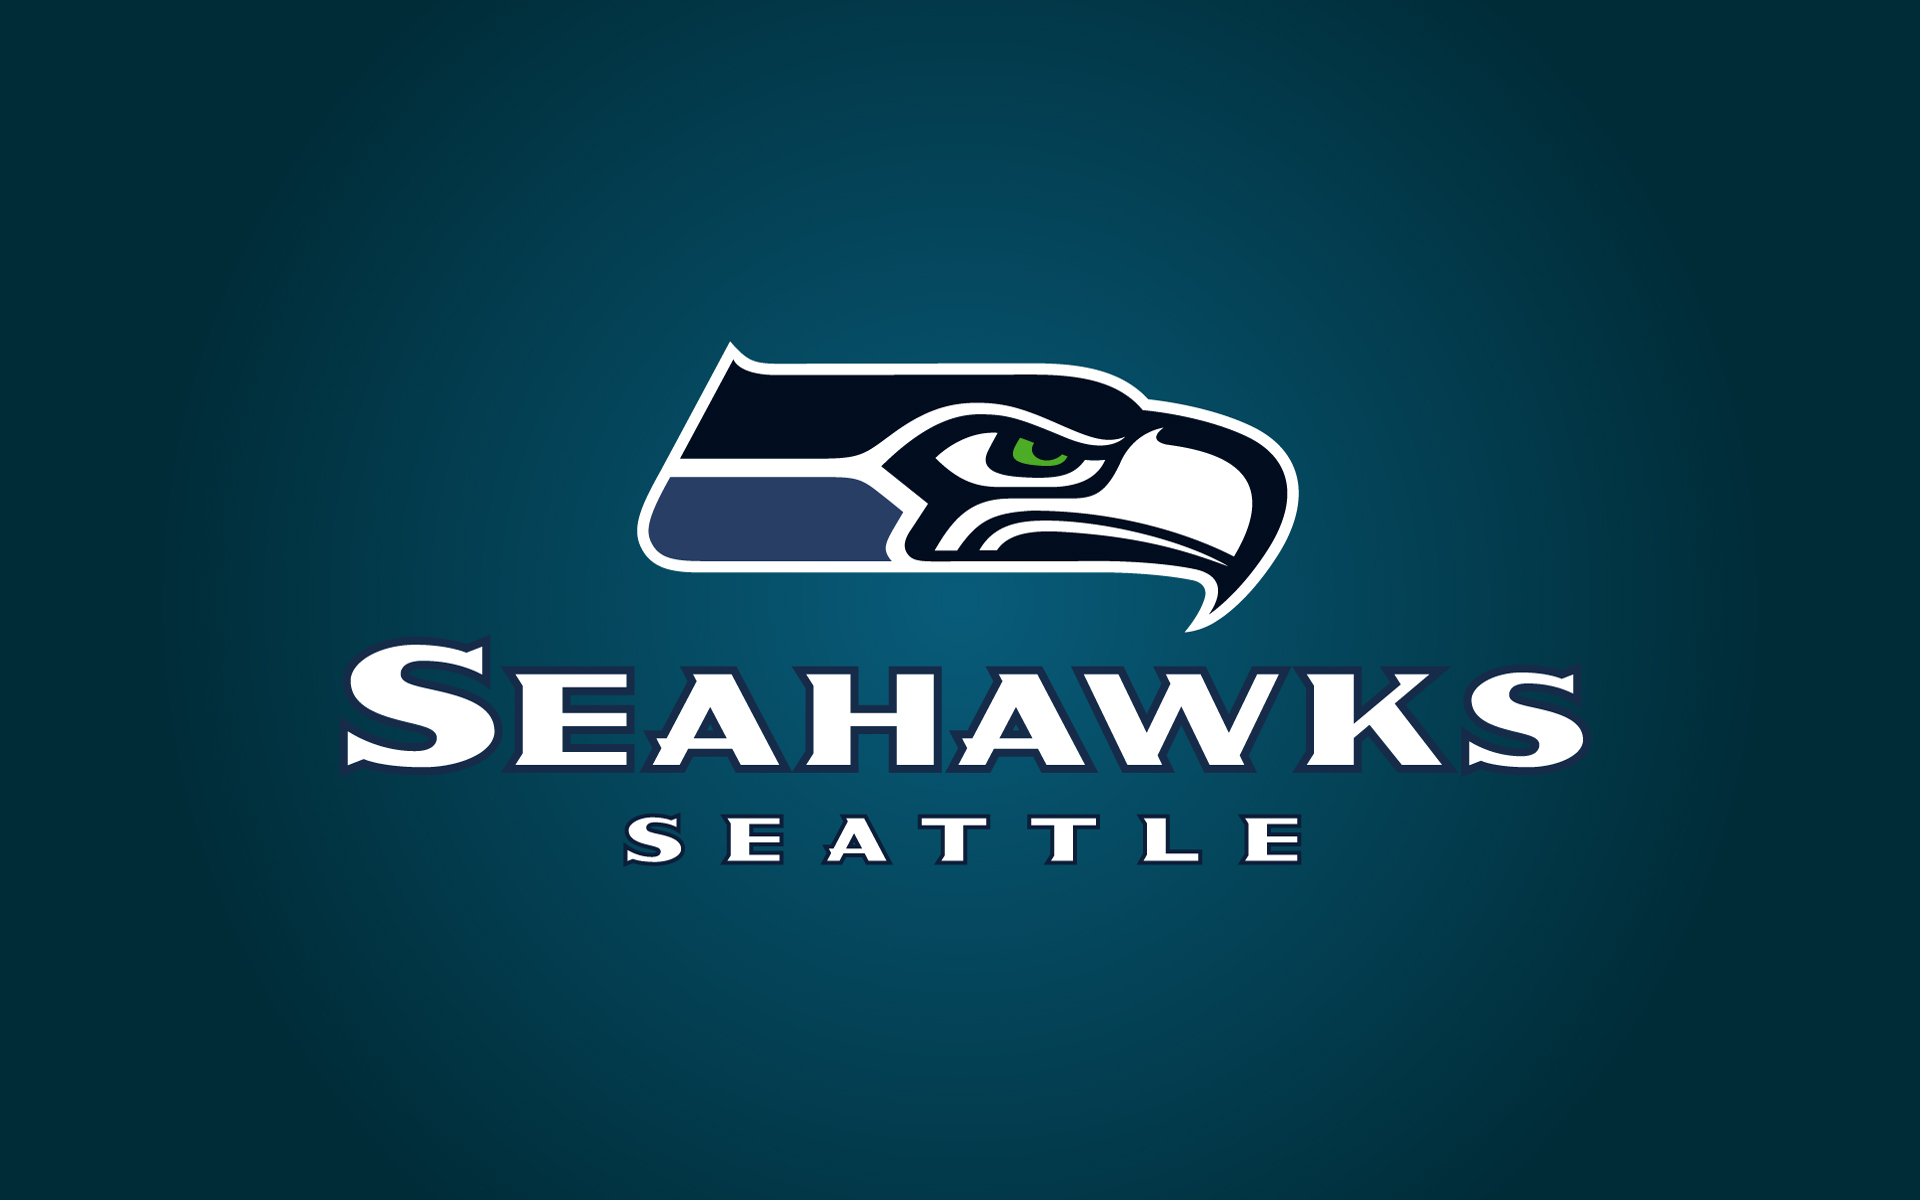 Seattle Seahawks Backgrounds, Compatible - PC, Mobile, Gadgets| 1920x1200 px